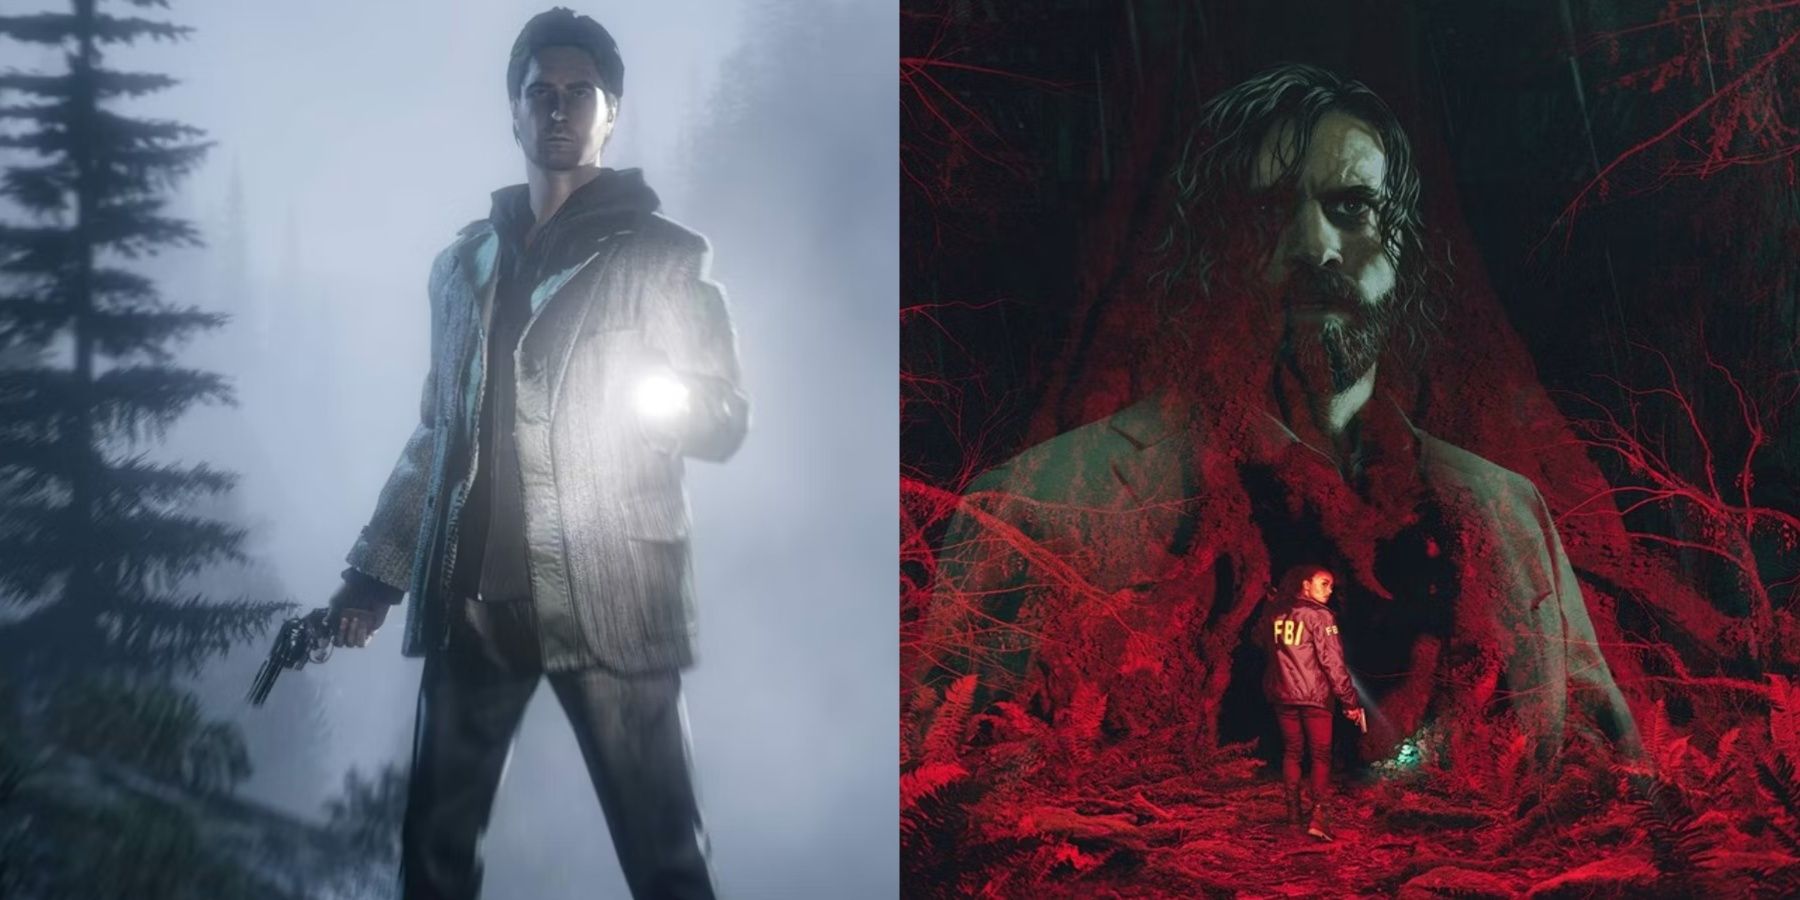 Alan Wake Remastered comparison shows off Xbox Series X visuals